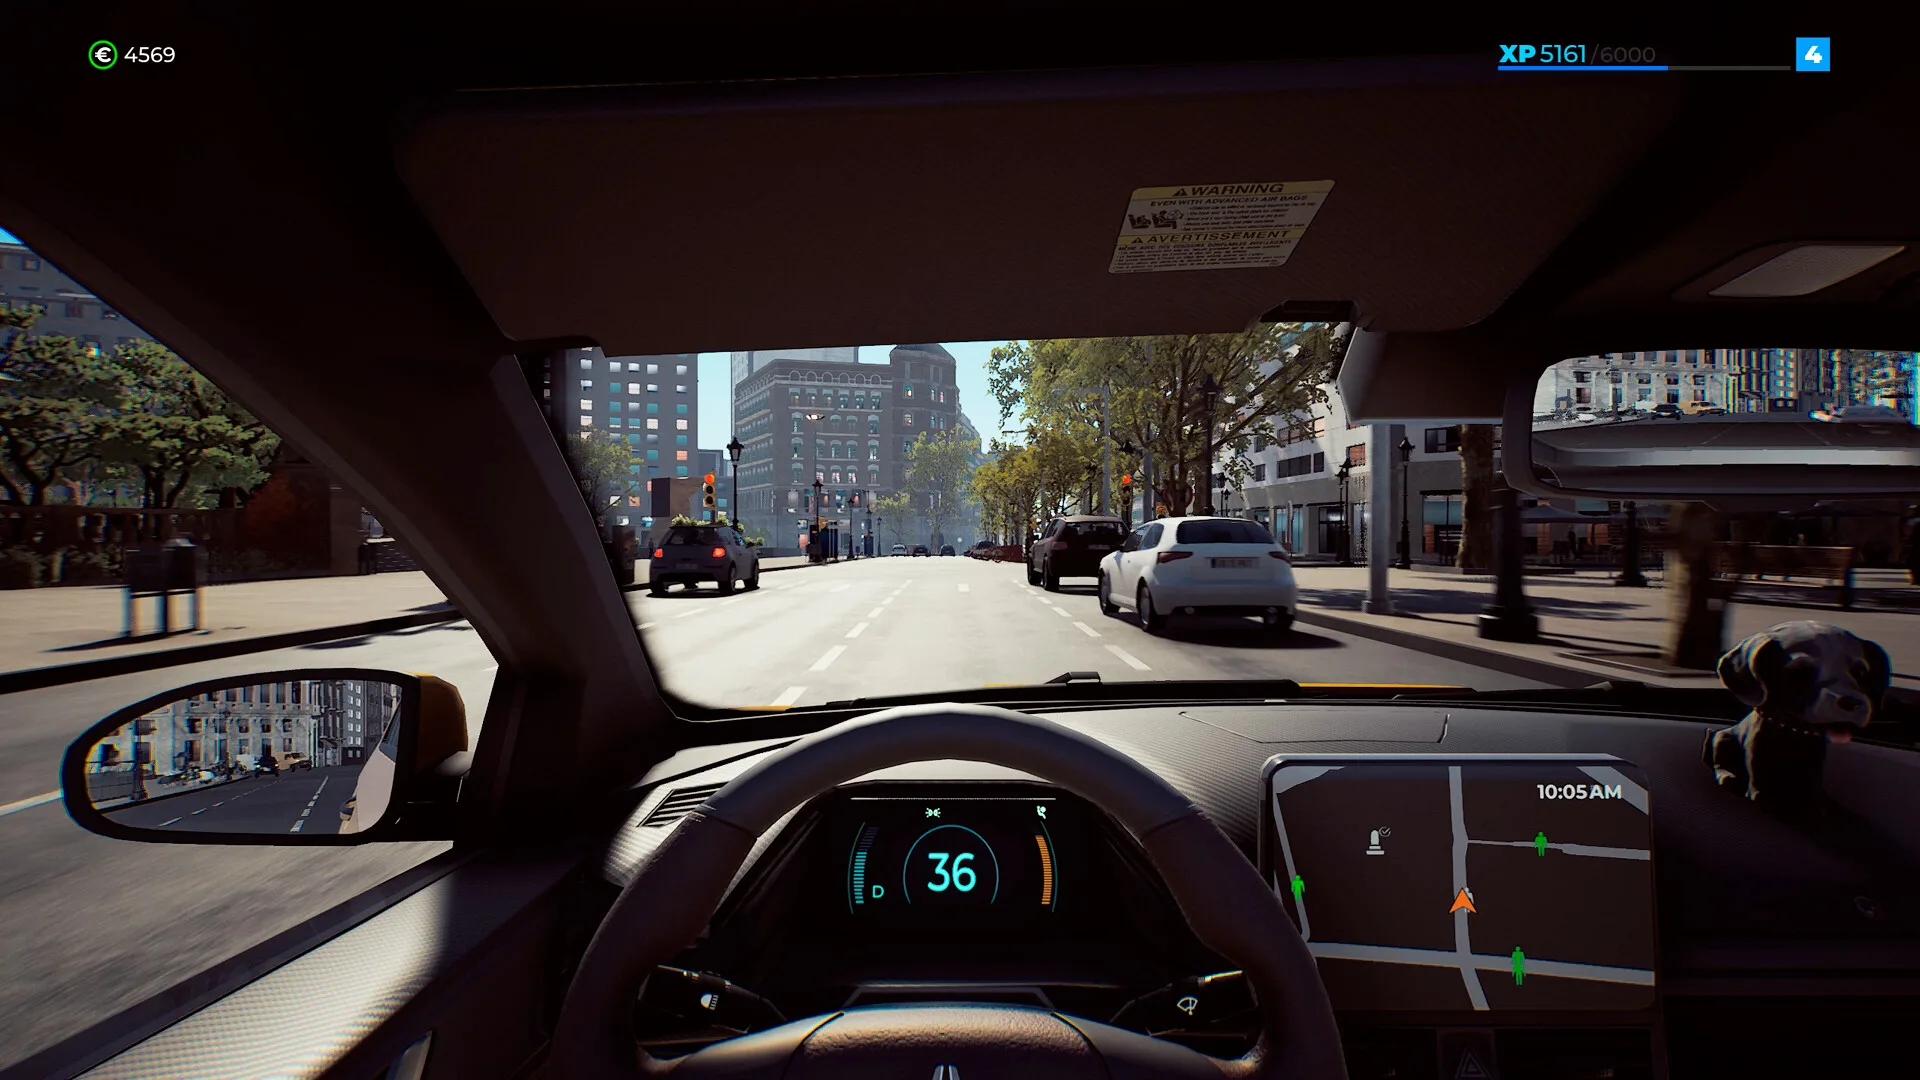 Taxi Life A City Driving Simulator Torrent